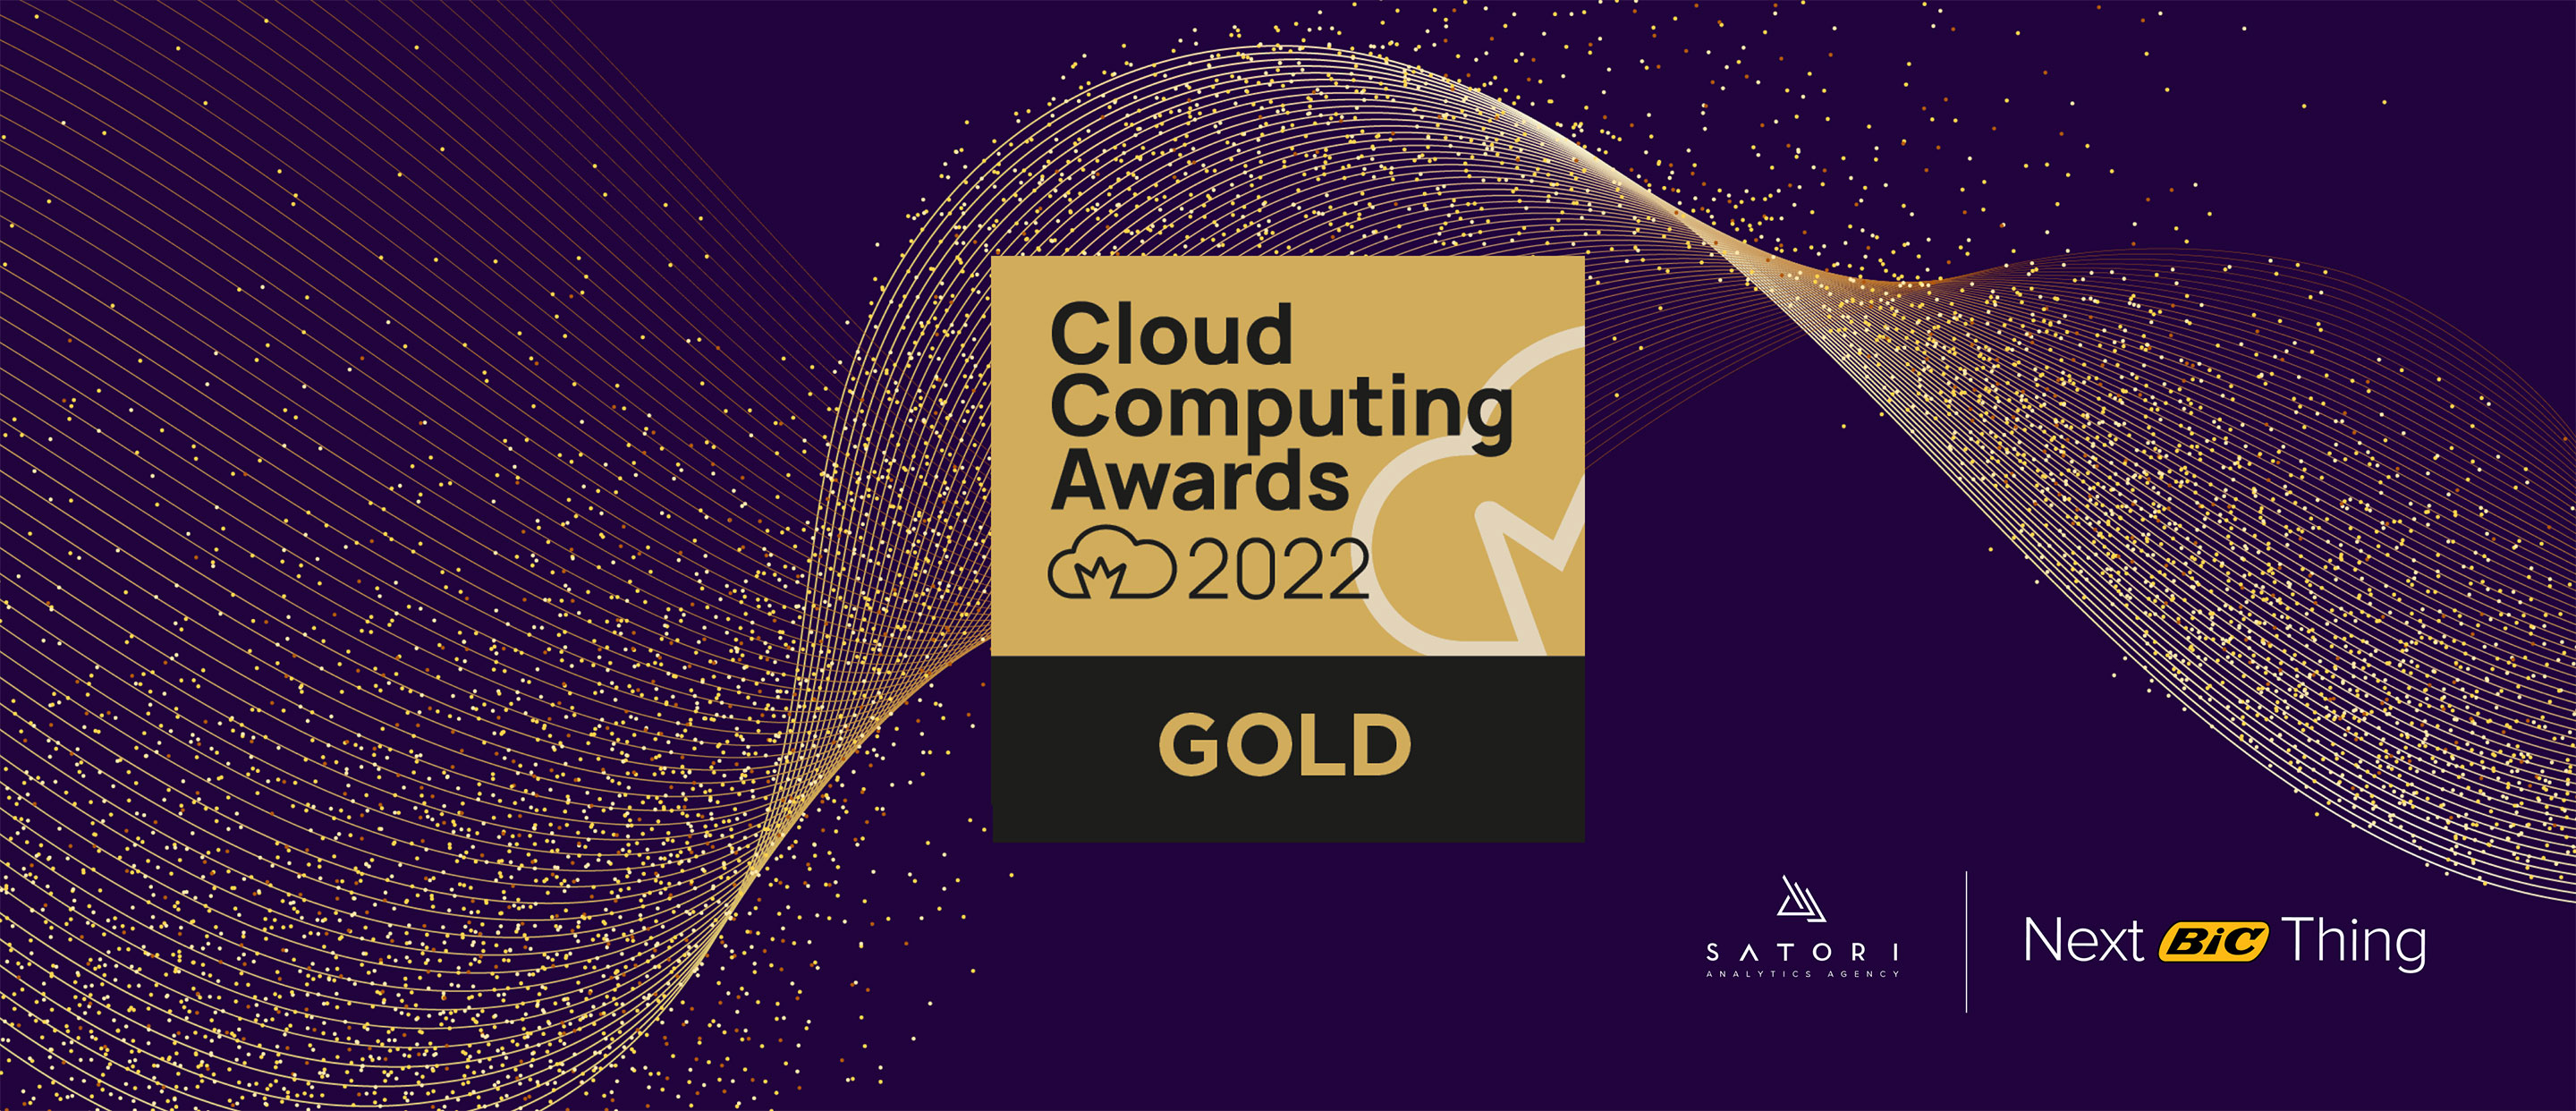 Satori Analytics won the Gold Cloud Computing Award